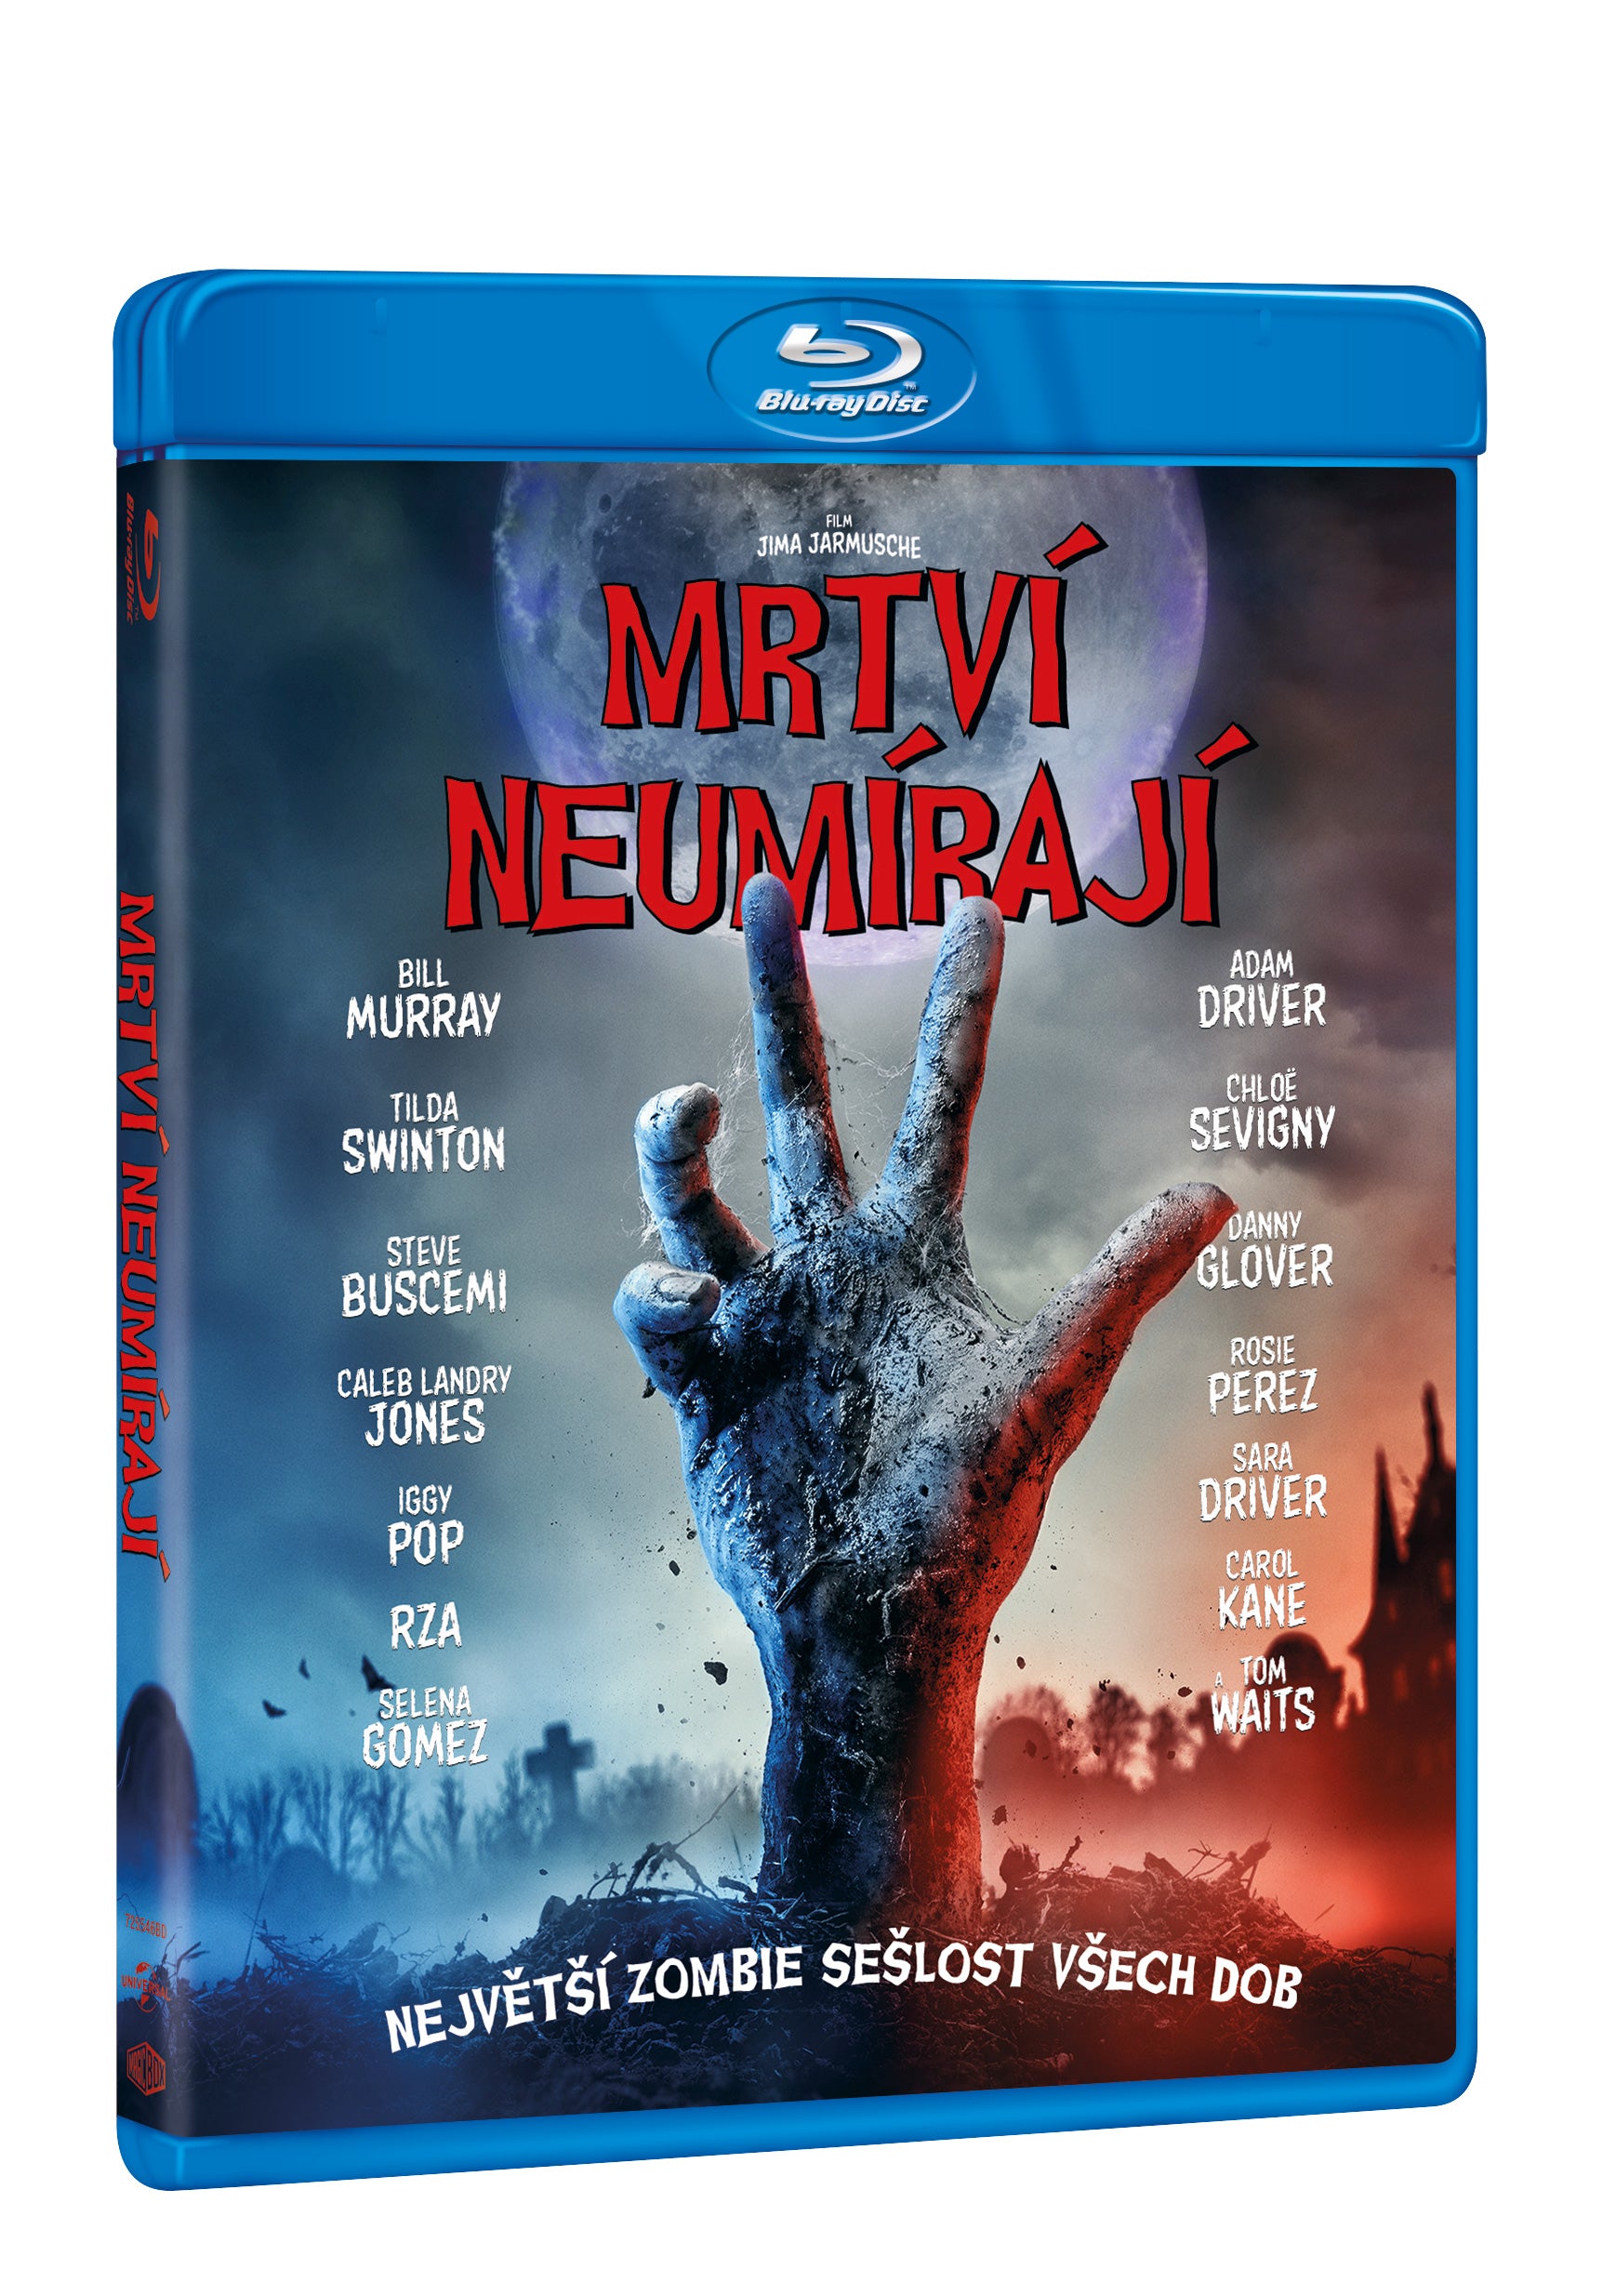 Mrtvi neumiraji BD / The Dead Don’t die - Czech version